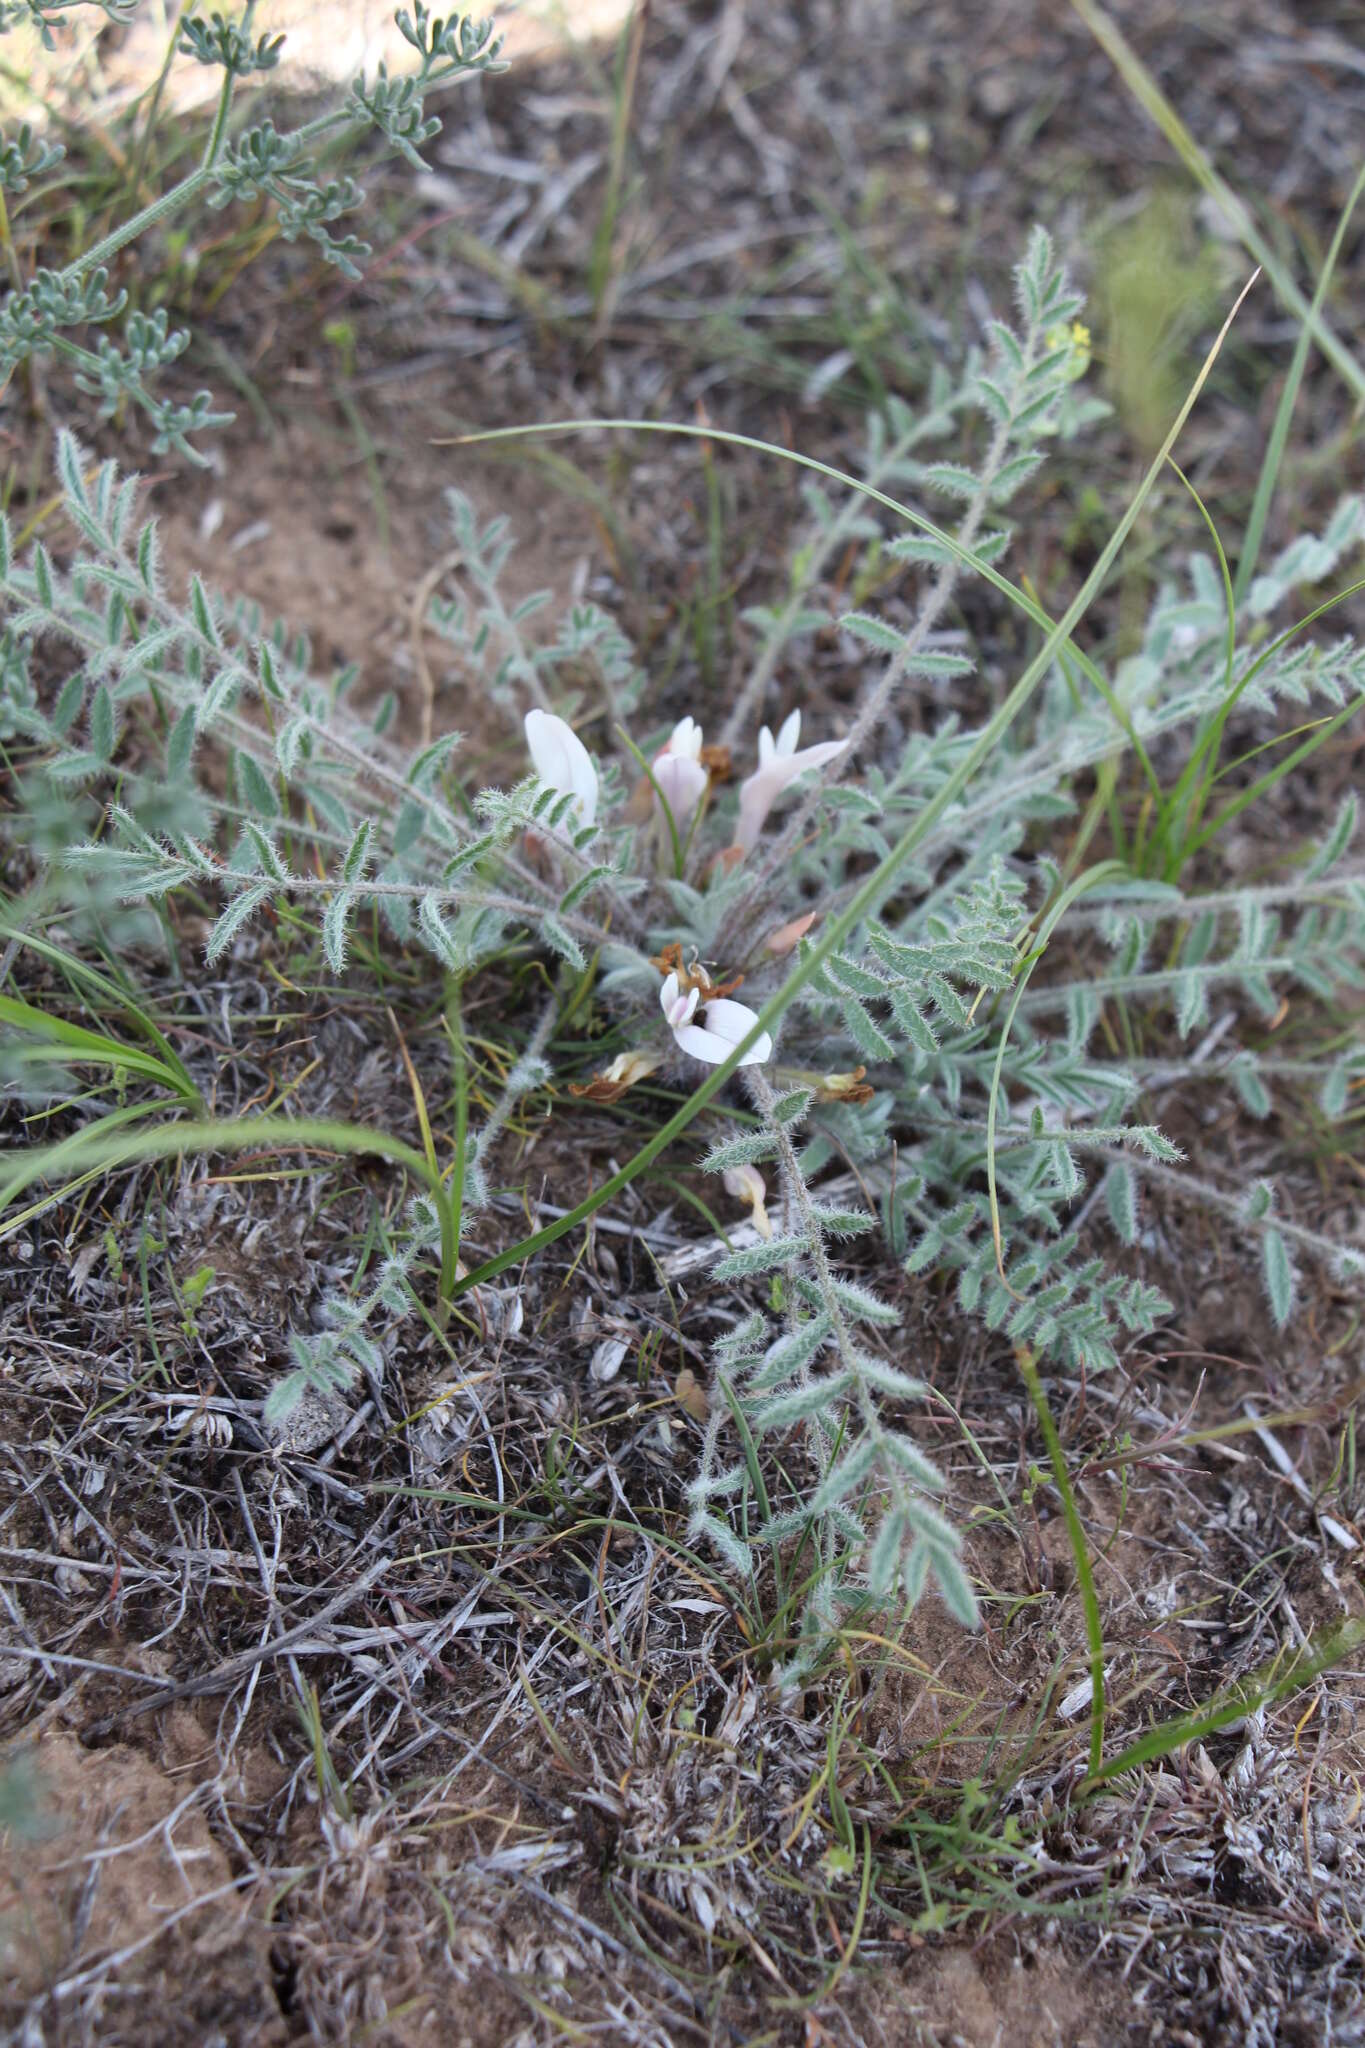 Image of Astragalus dolichophyllus Pall.